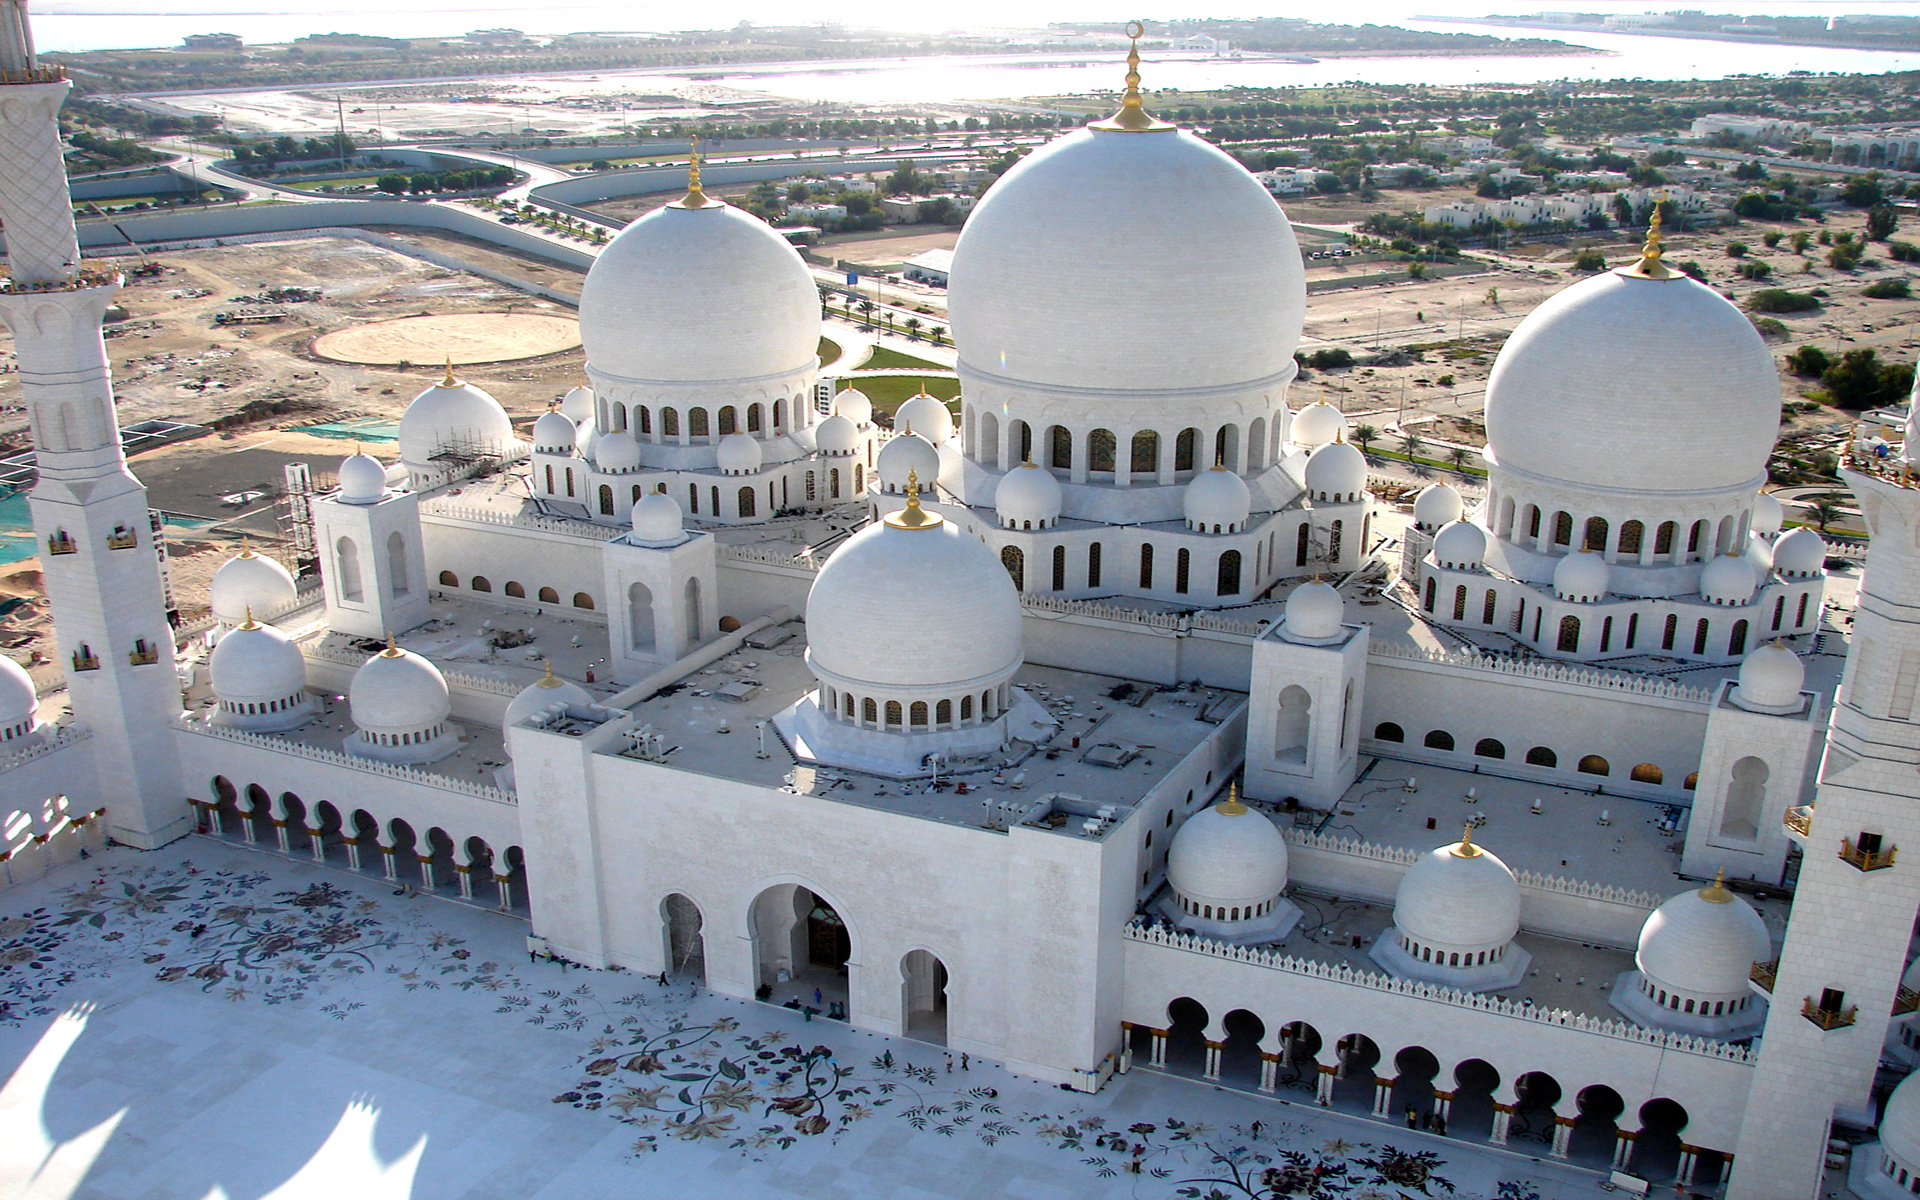 Храм для индусов в арабских эмиратах. Мечеть шейха Зайда Абу-Даби. Белая мечеть в Абу-Даби. Мечеть шейха Зайда в Абу-Даби, ОАЭ. Белая мечеть шейха Зайда в Абу-Даби.